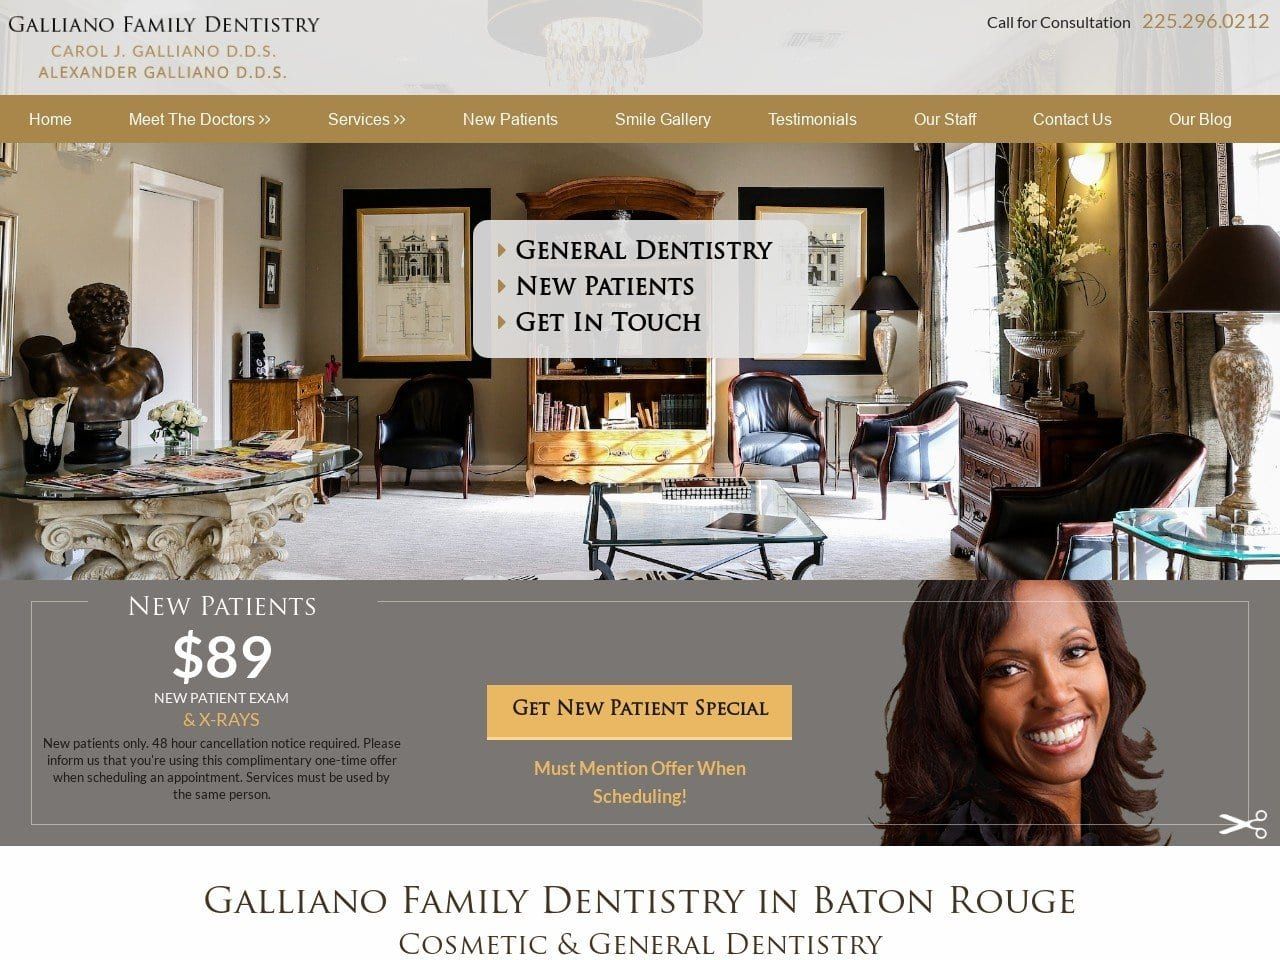 Galliano Family Dentistry Website Screenshot from smilesbygalliano.com